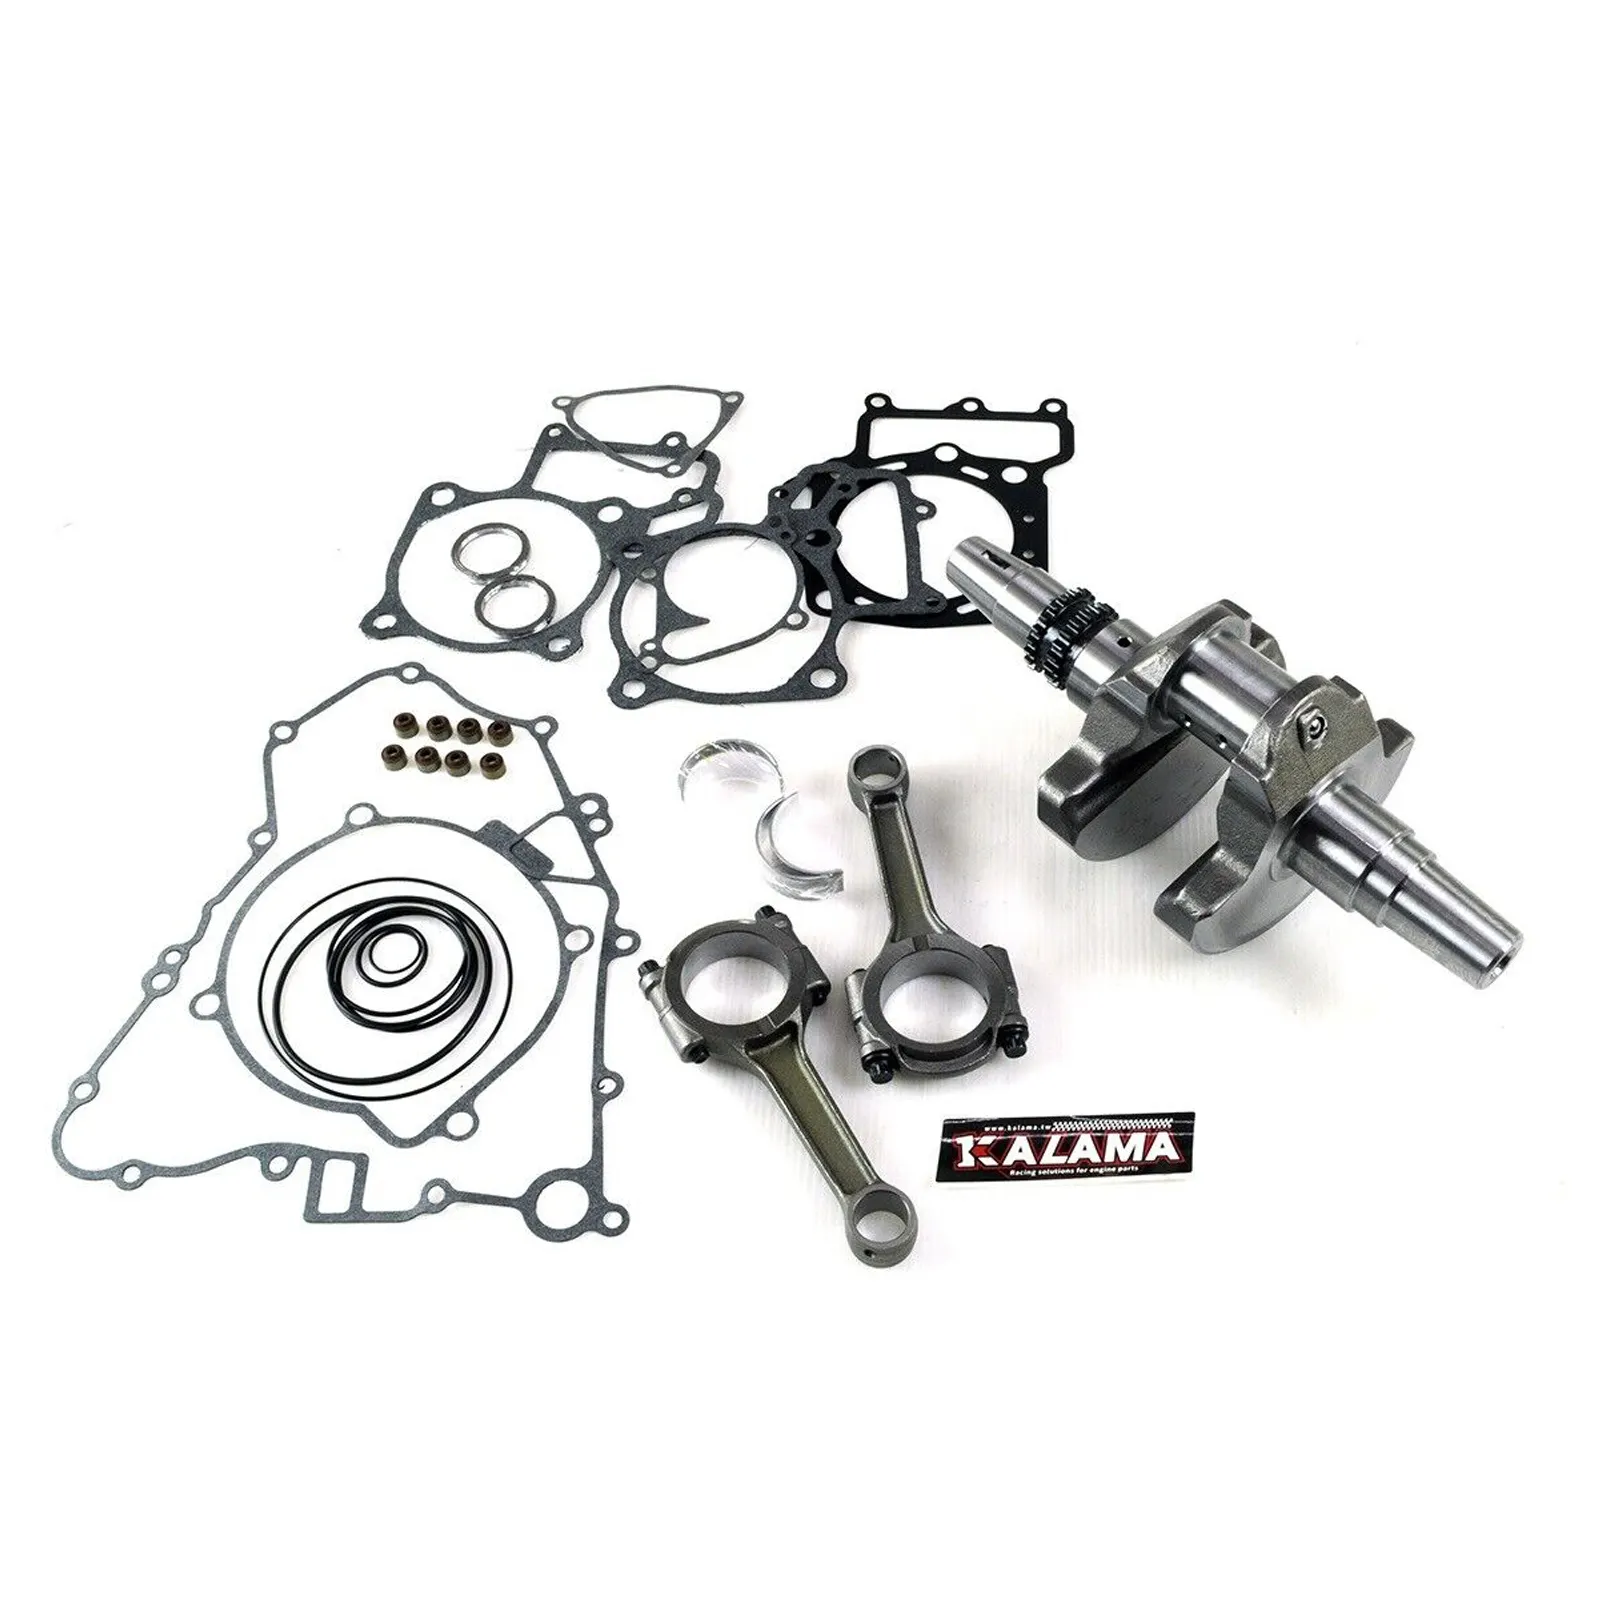 Rebuild Engine Kit for Kawasaki Brute Force 750 12~20 2012~2020 Crank Crankshaft without mark x 1 #13031-0718, 13031-0938